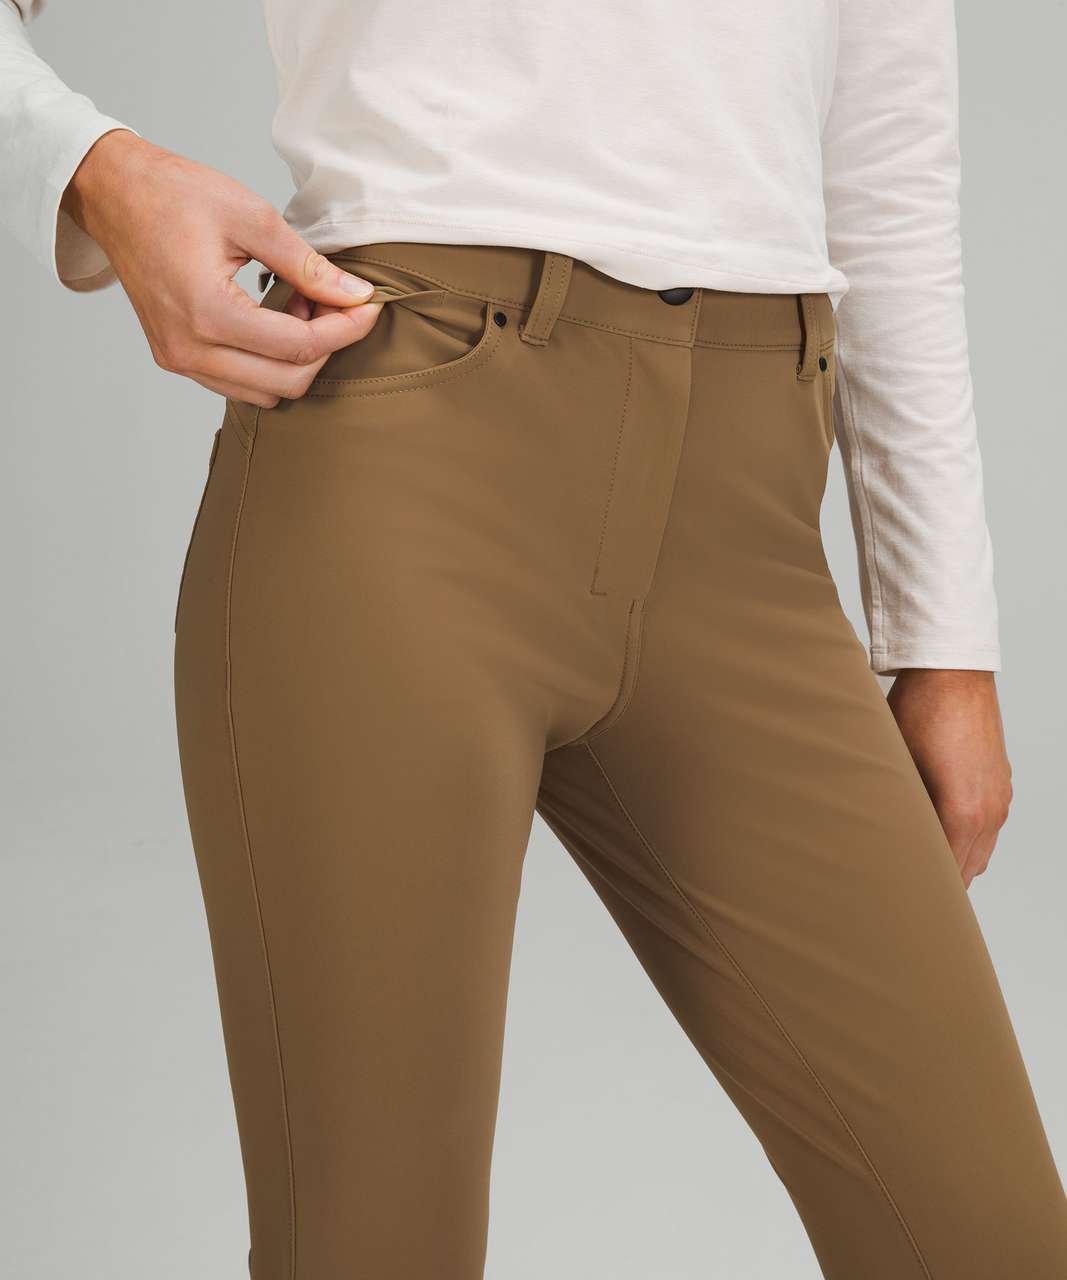 Stay stylish and comfortable with Lululemon City Sleek Slim Fit Pants